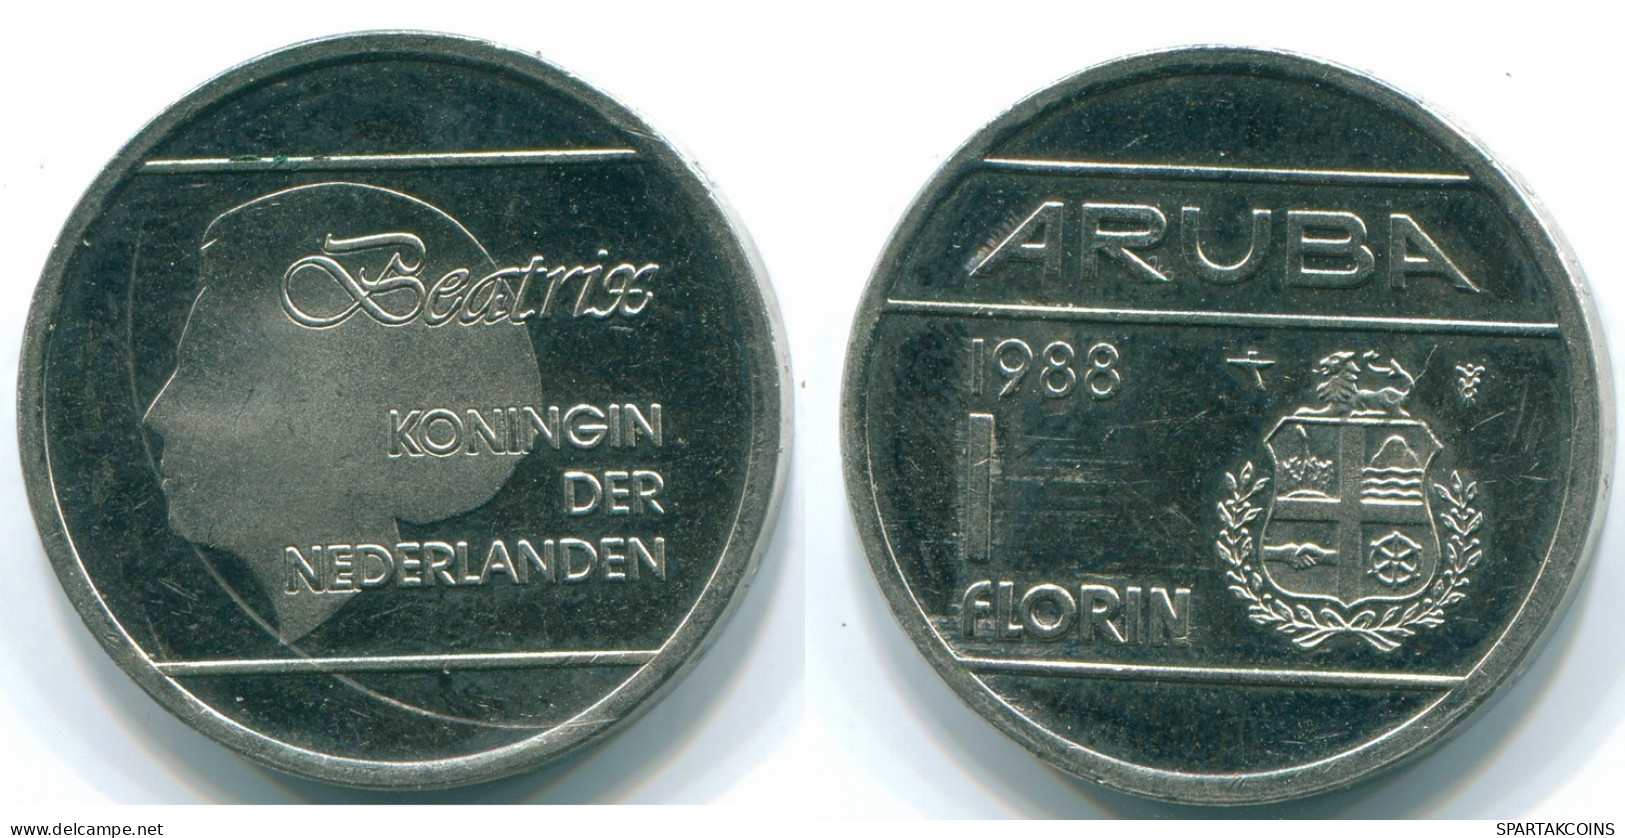 1 FLORIN 1986 ARUBA (NÉERLANDAIS NETHERLANDS) Nickel Colonial Pièce #S13650.F.A - Aruba